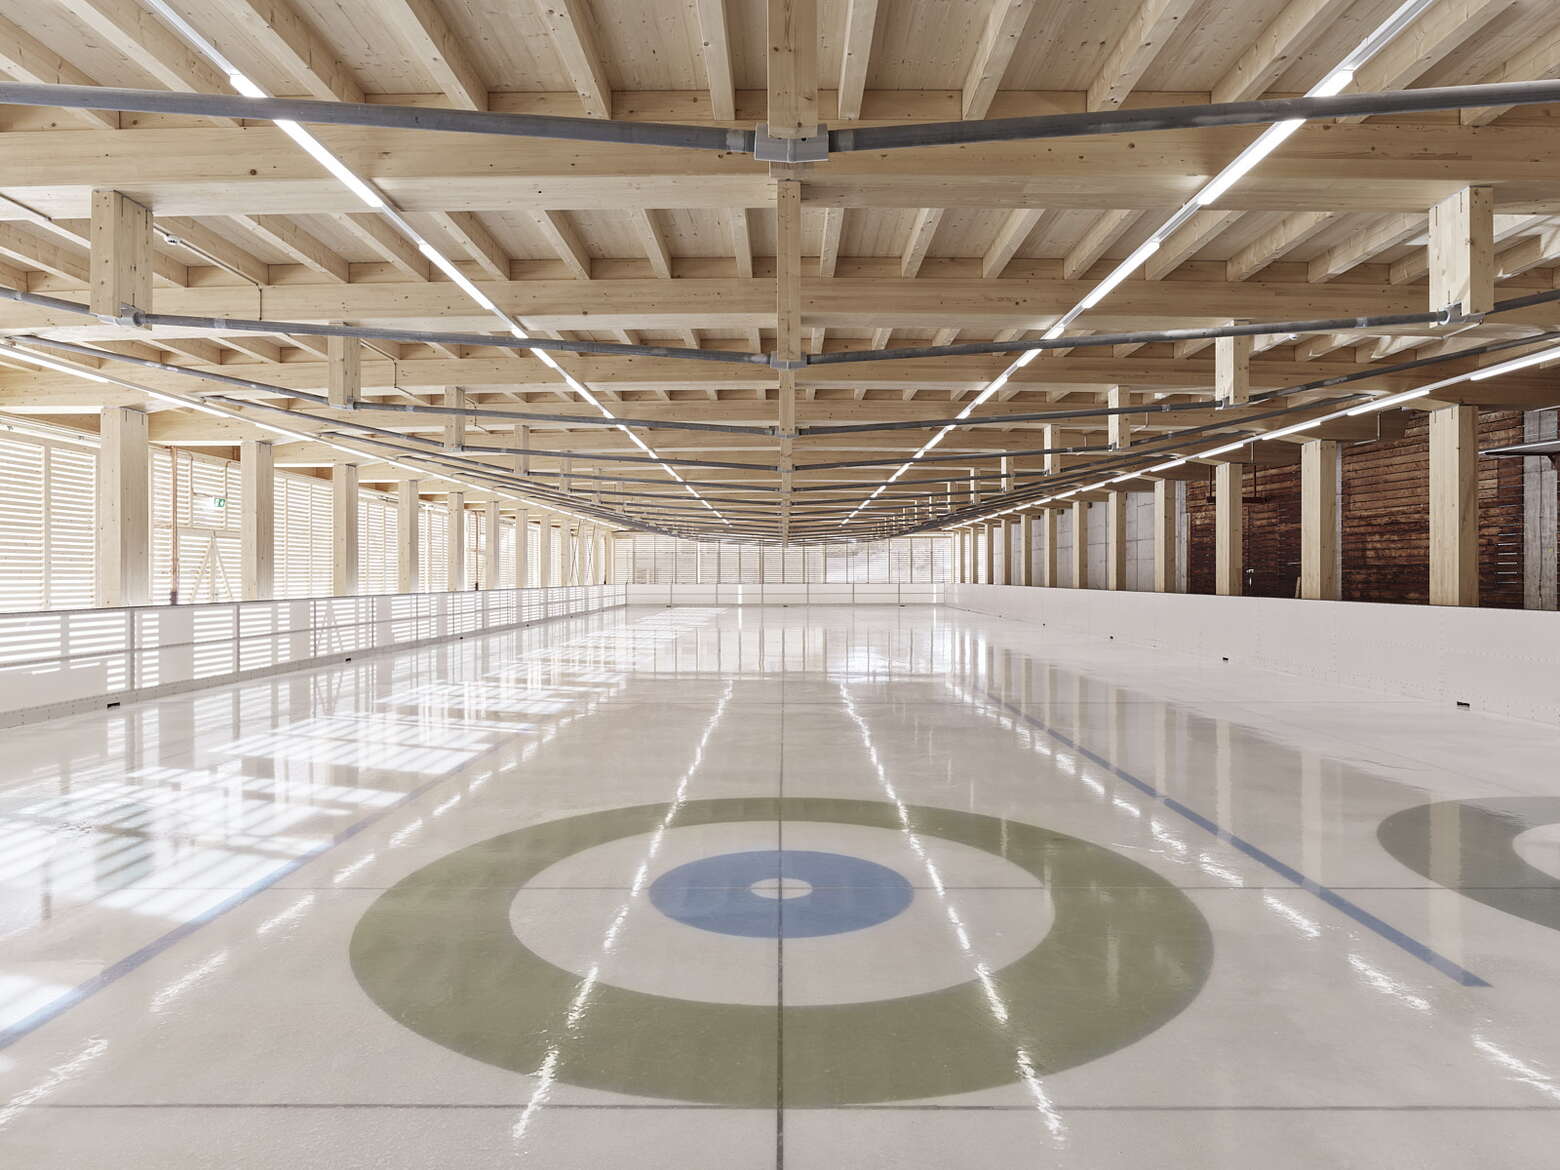 Neubau Curlinghalle Mürren